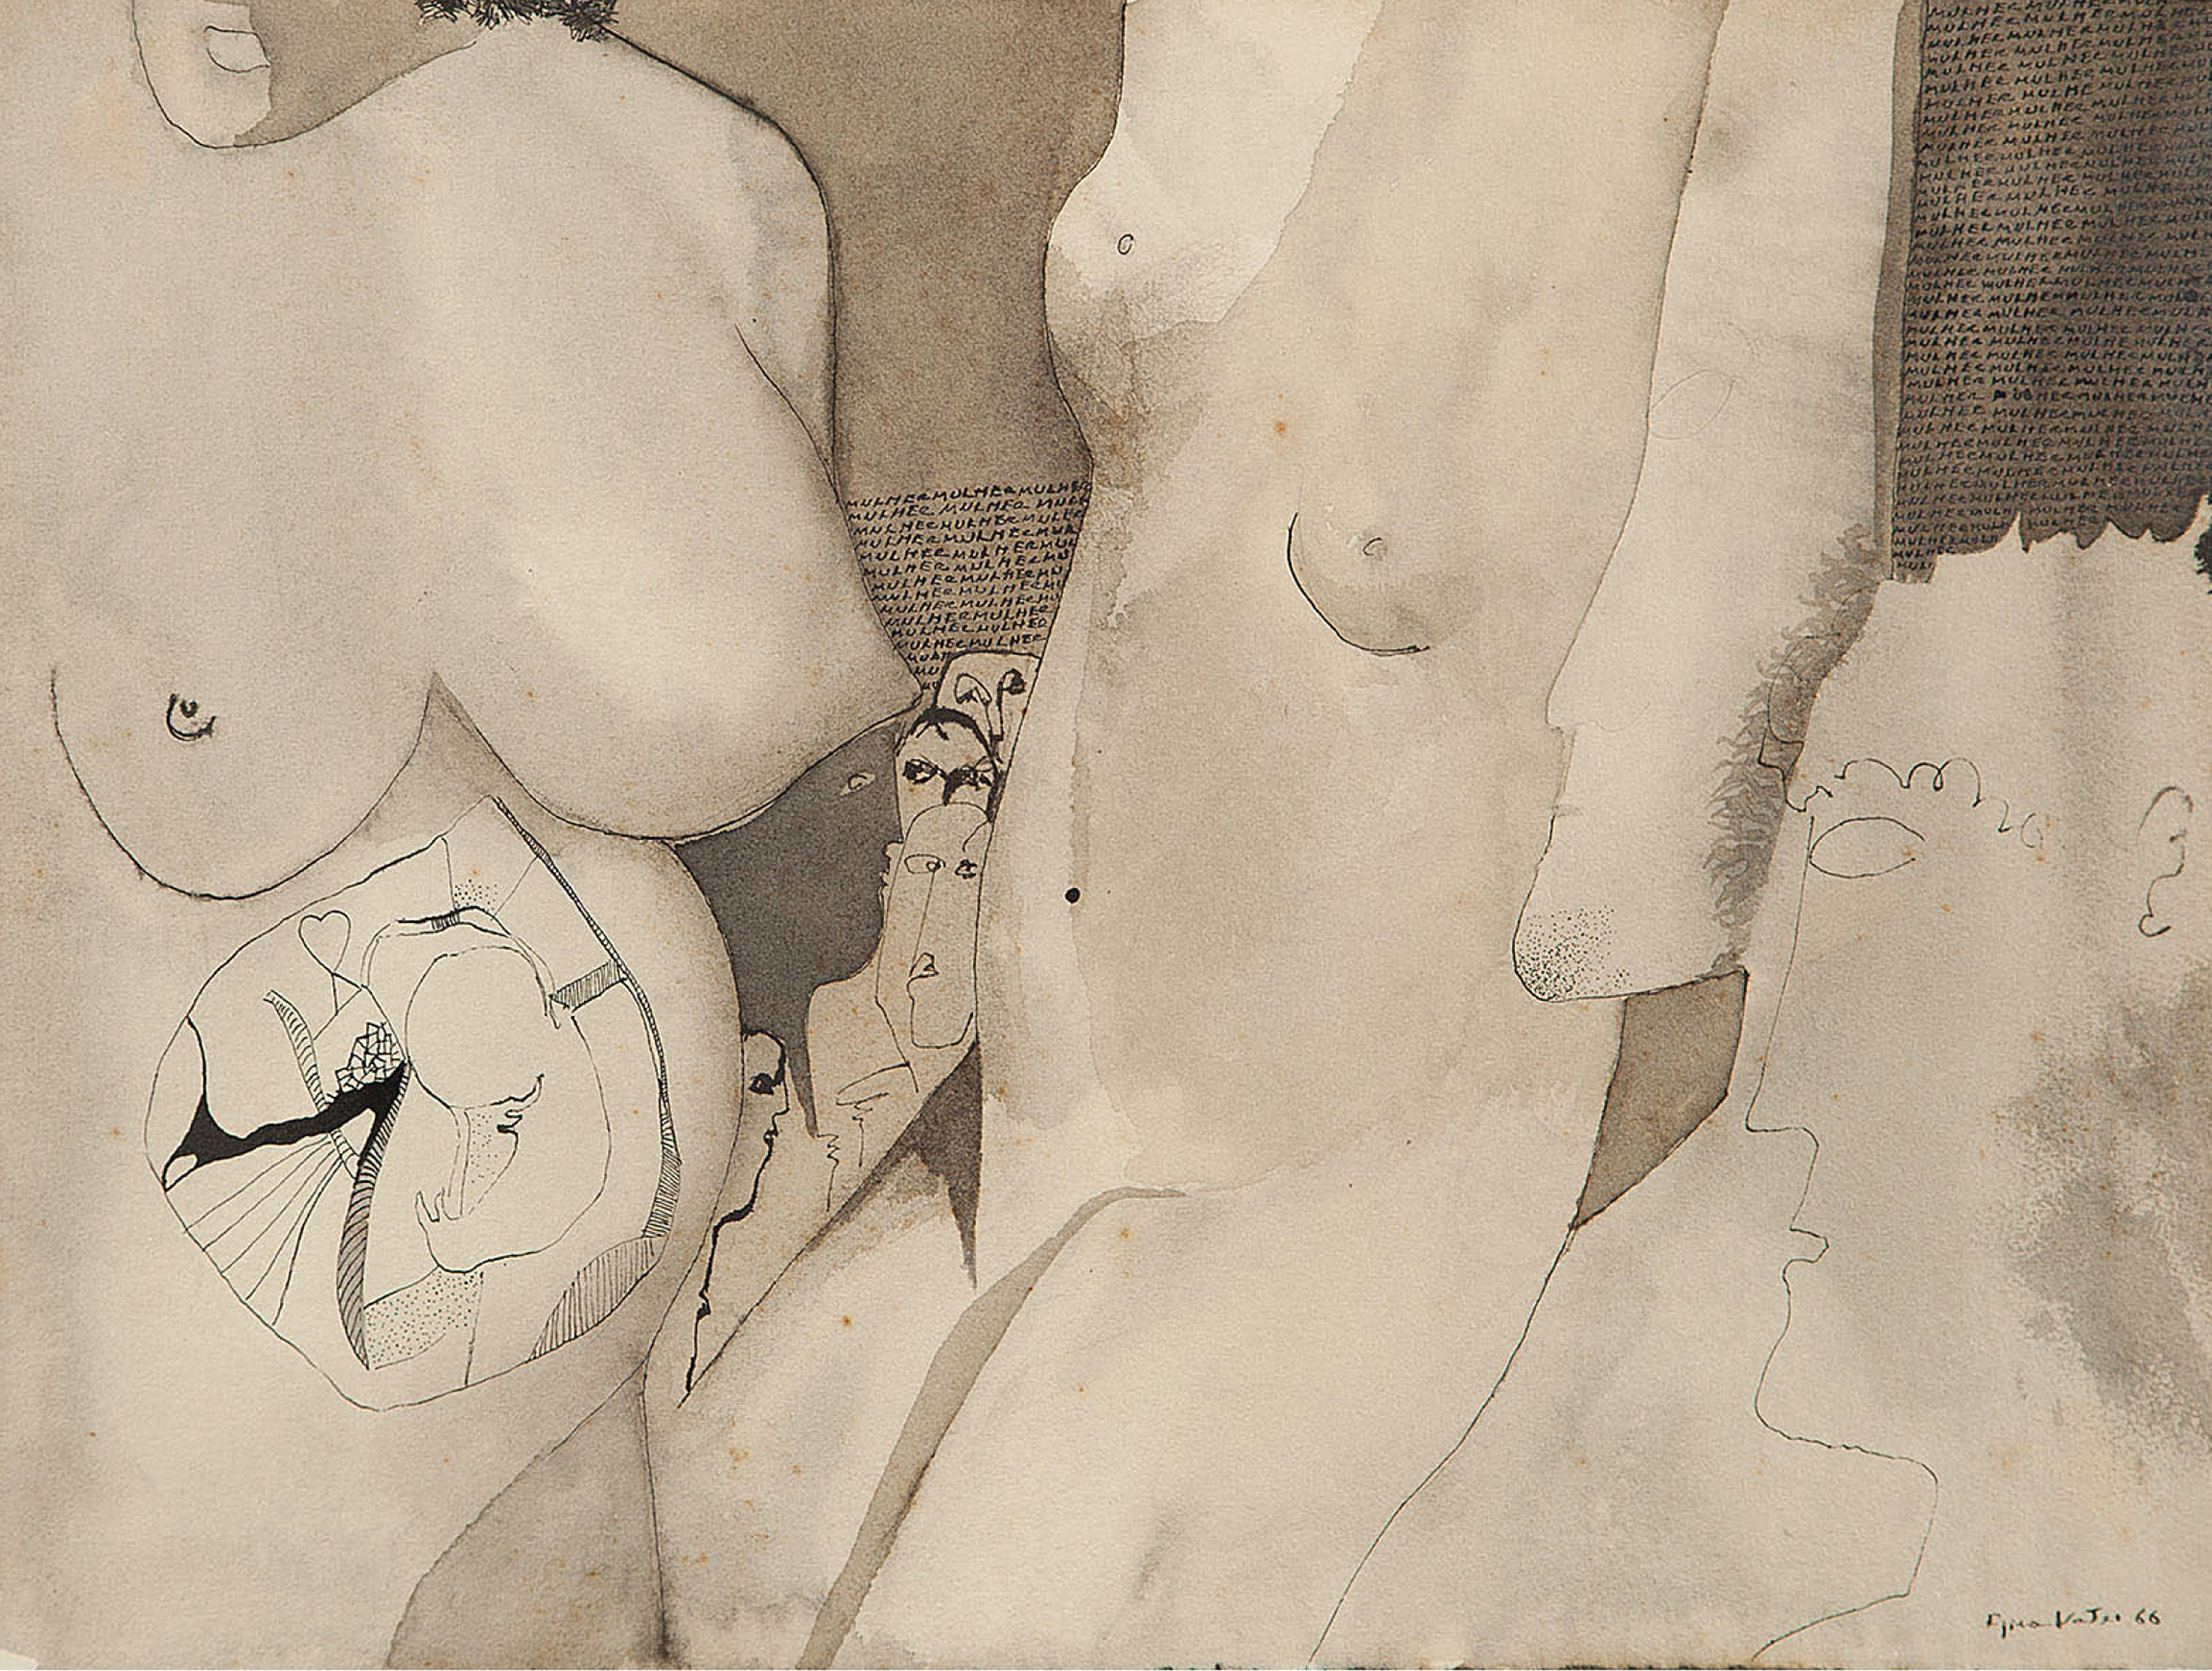 Galerie Barbara Thumm \ Regina Vater: Mulher, mulher,mulher (RVa-66-0001) \ Mulher, mulher,mulher (1966)